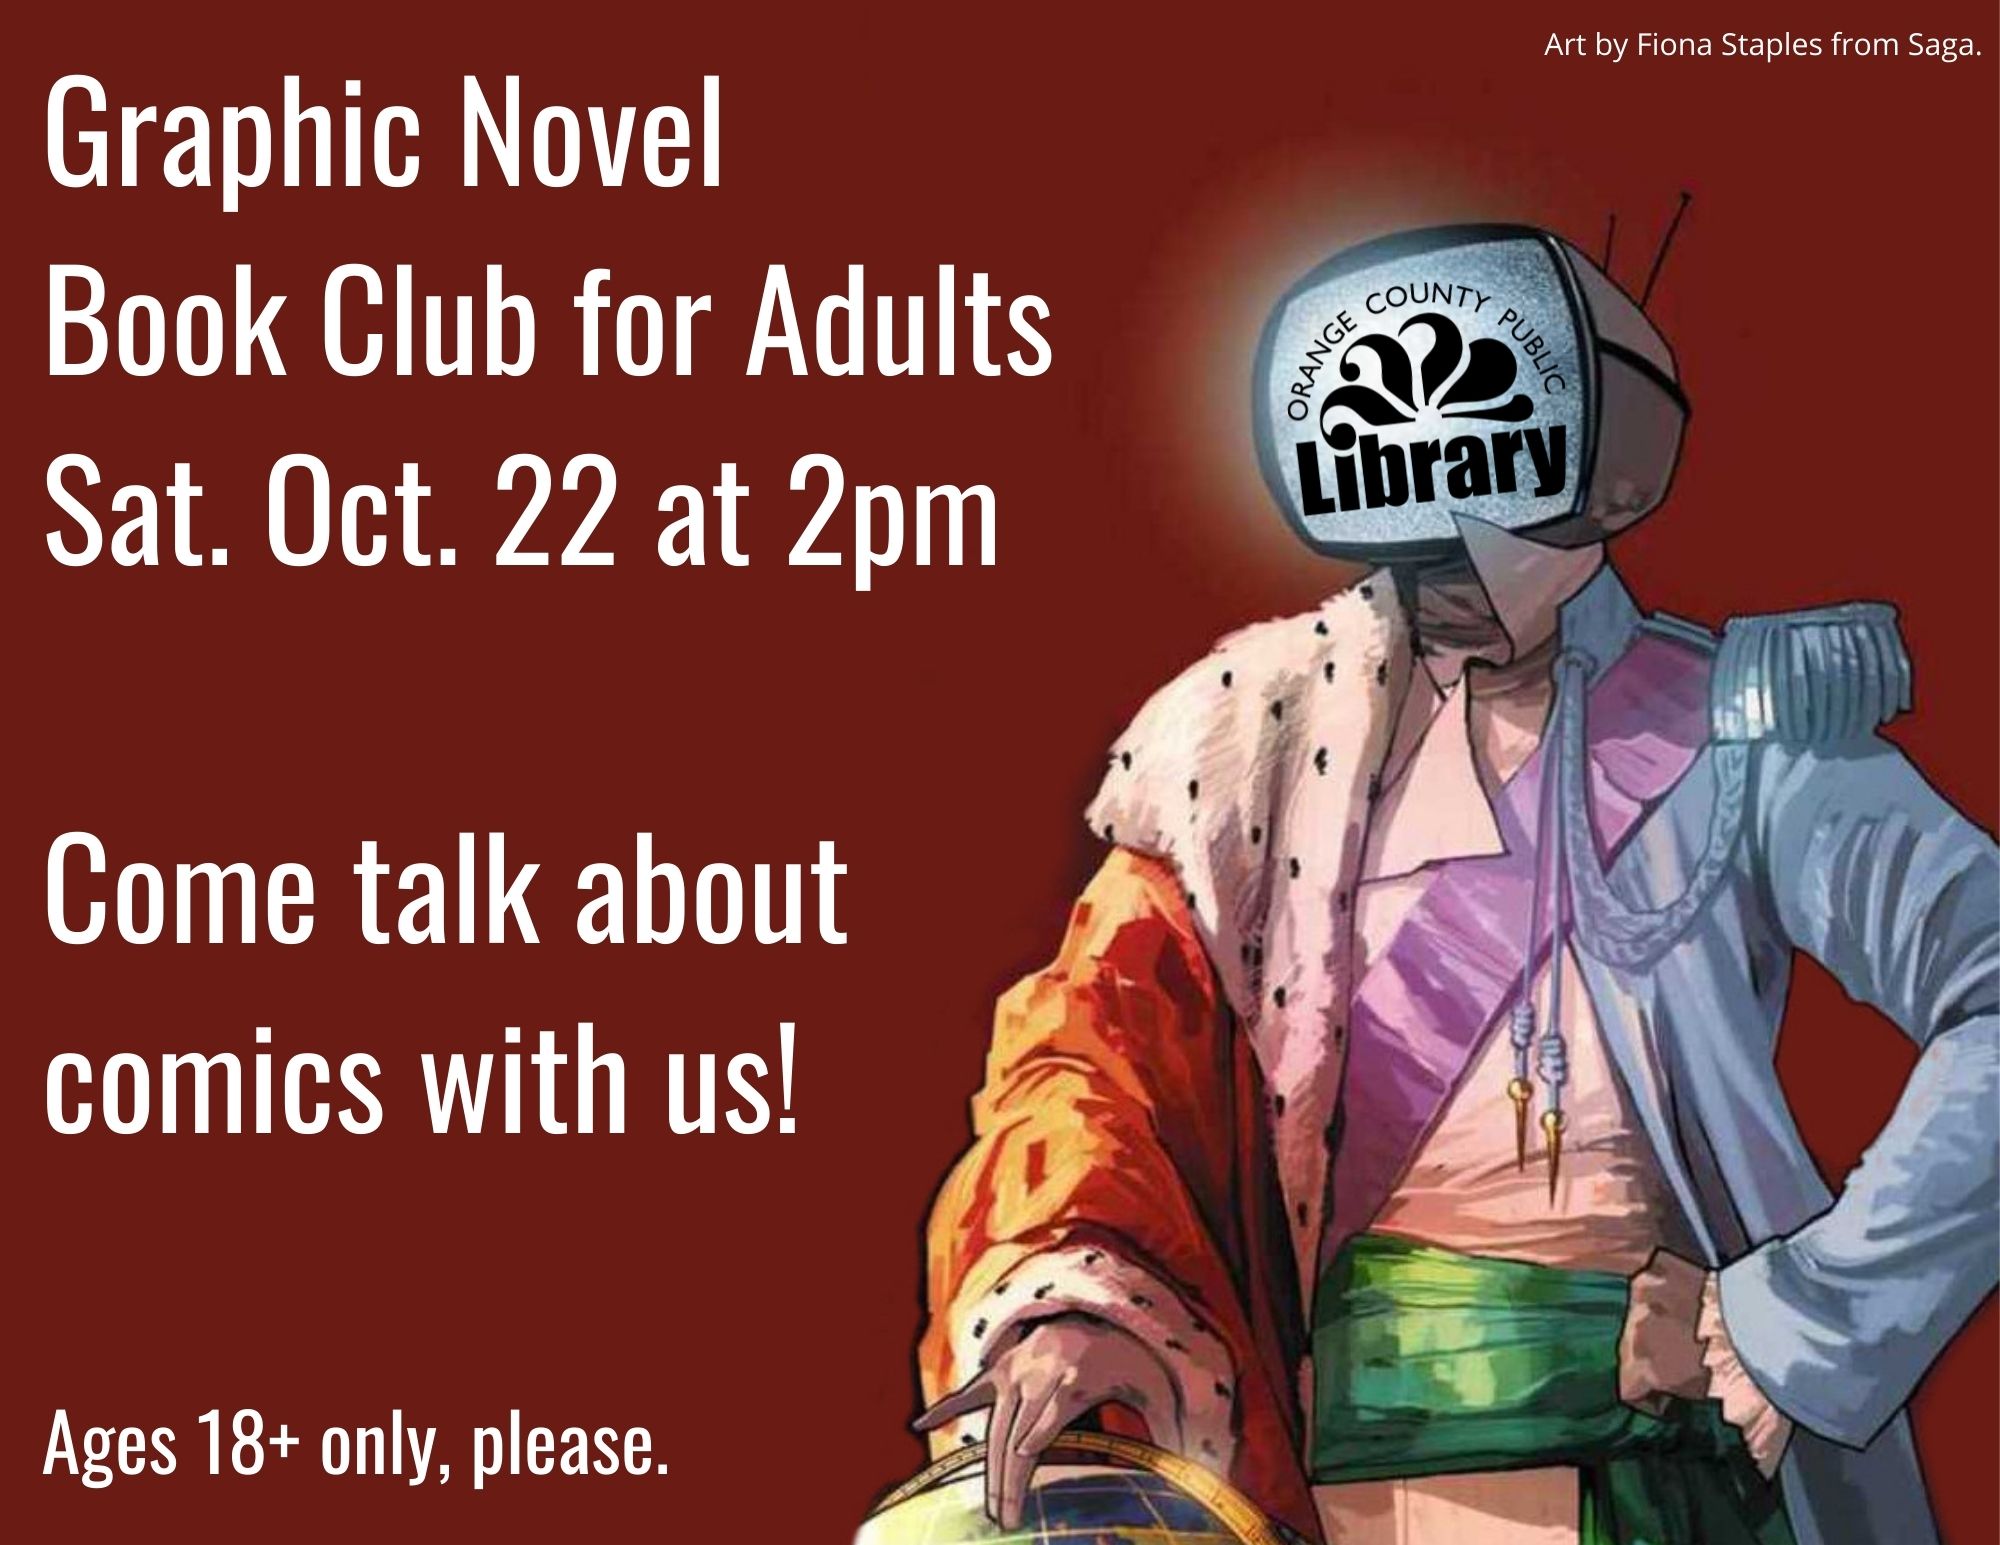 Graphic Novel Book Club Advertisement Image